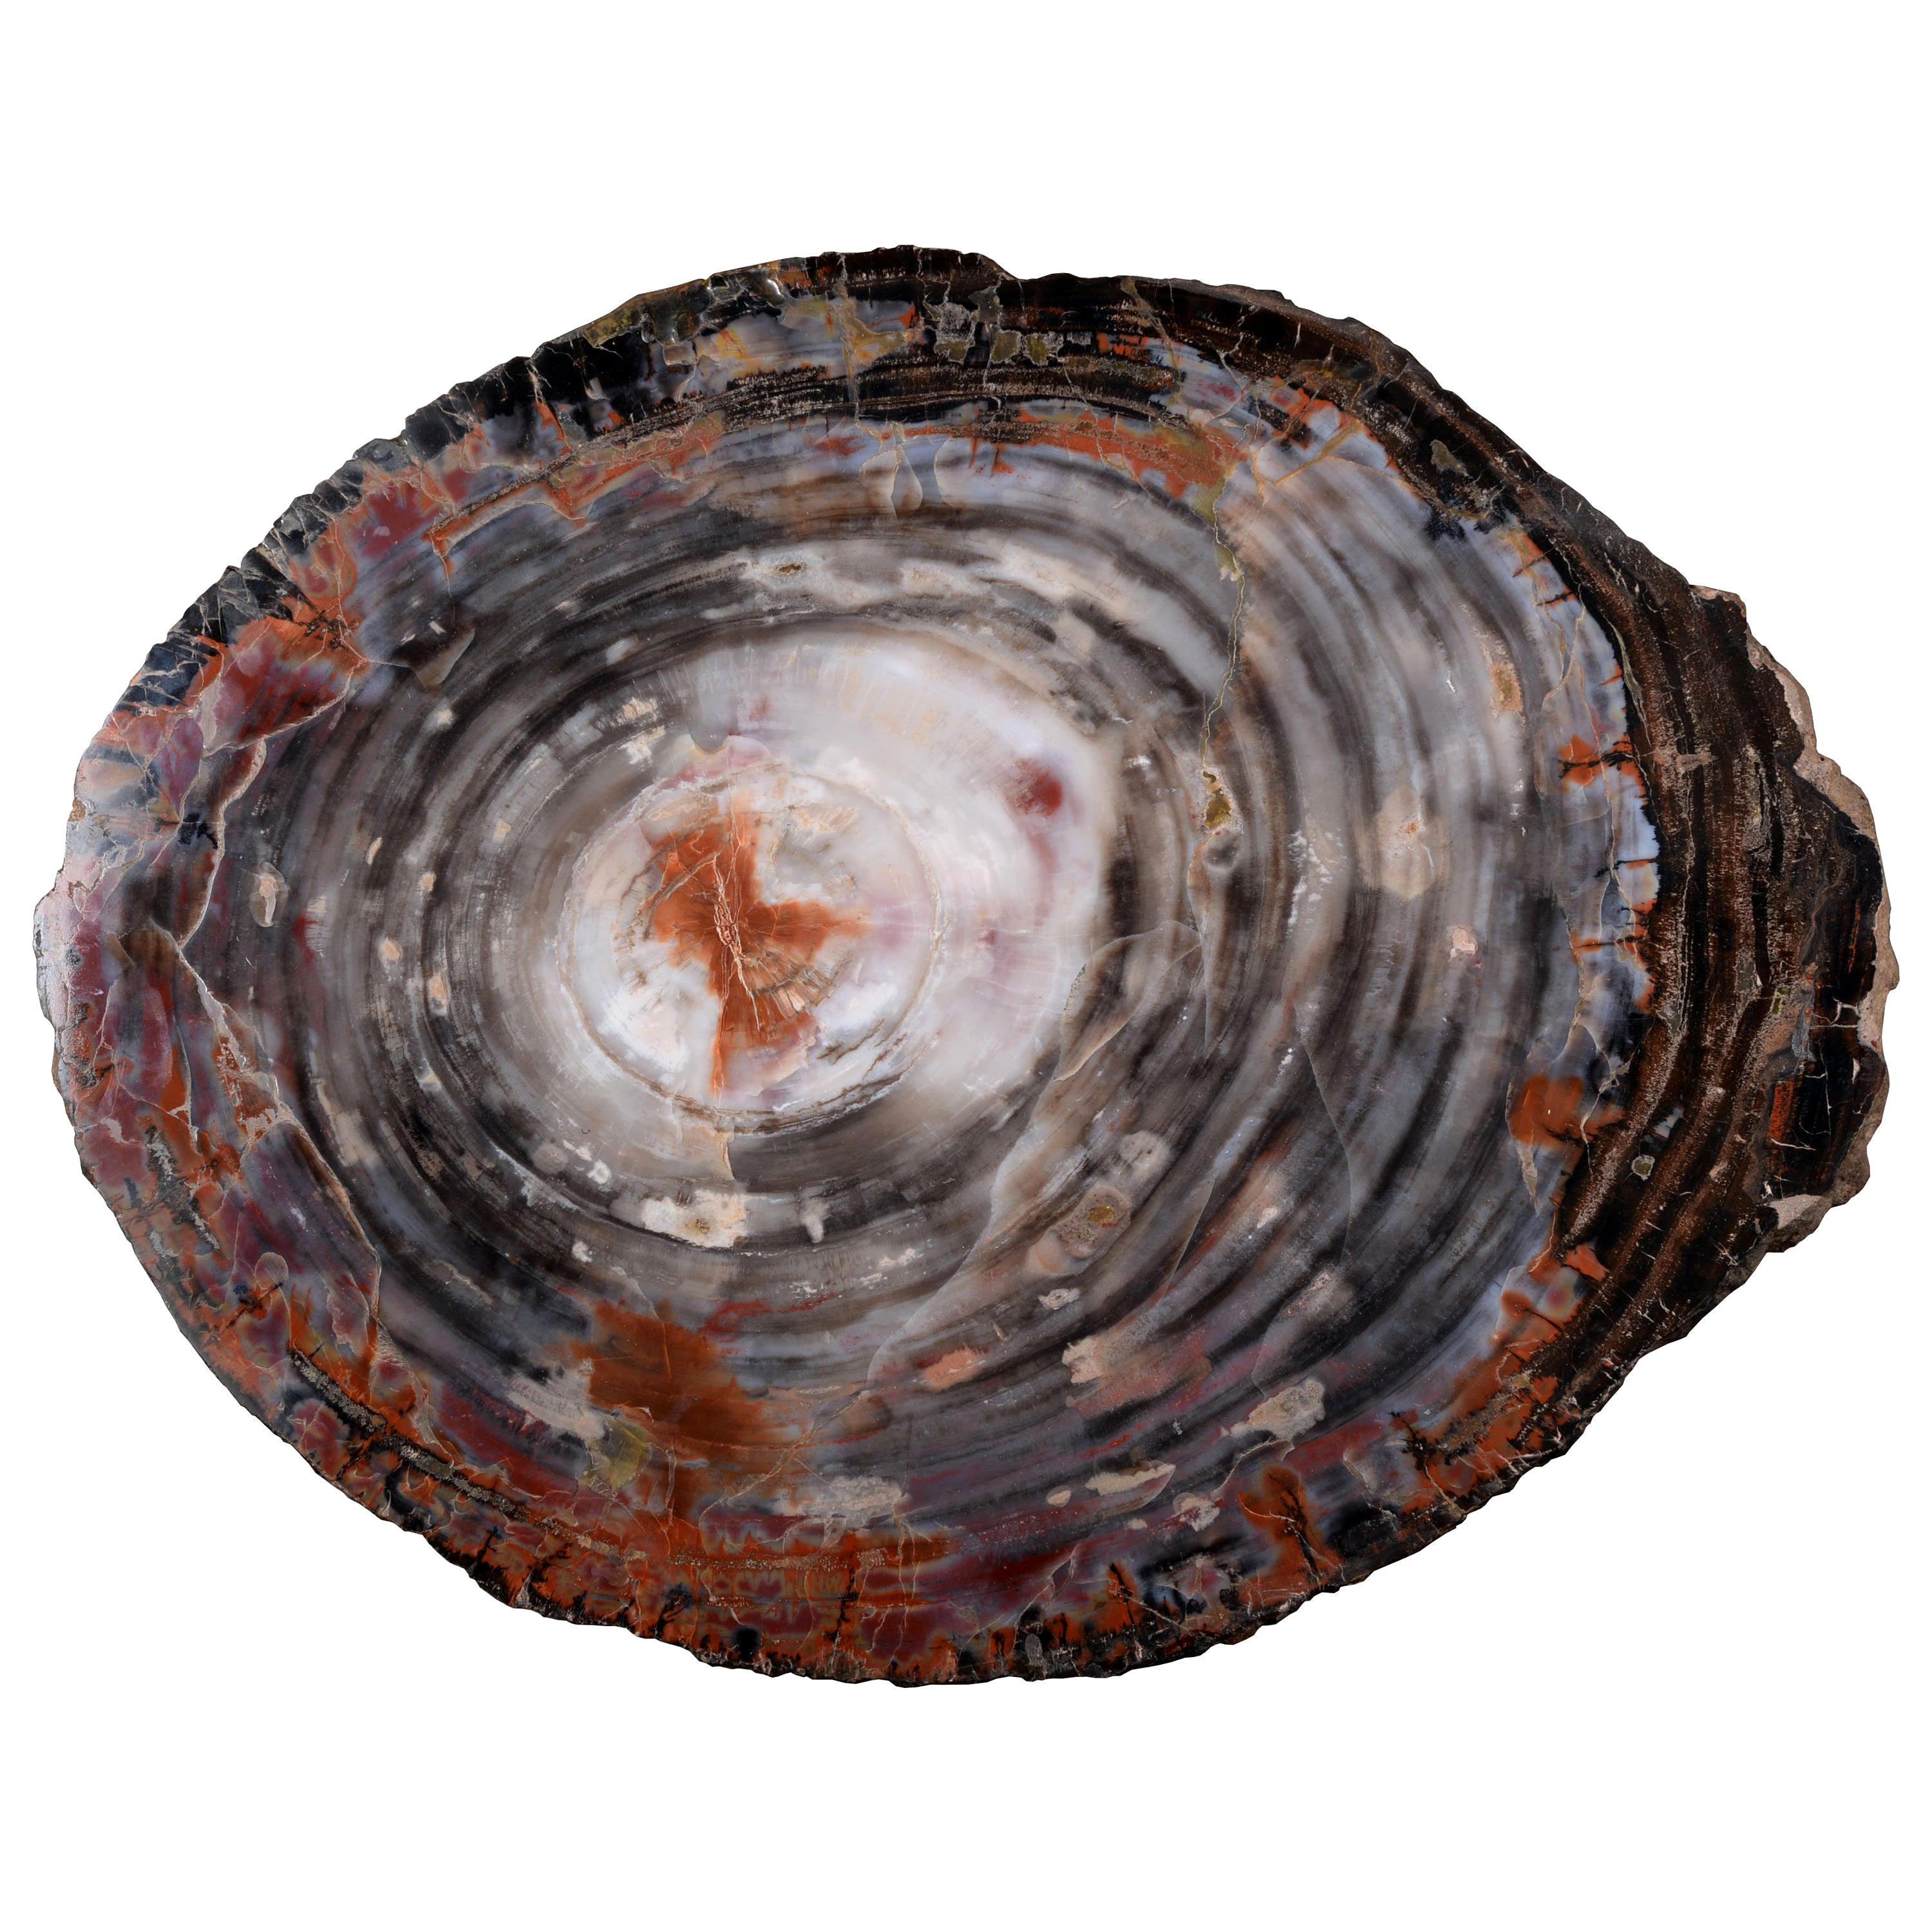 Vibrant Petrified Wood Slice from Arizona, 225 Million Years Old